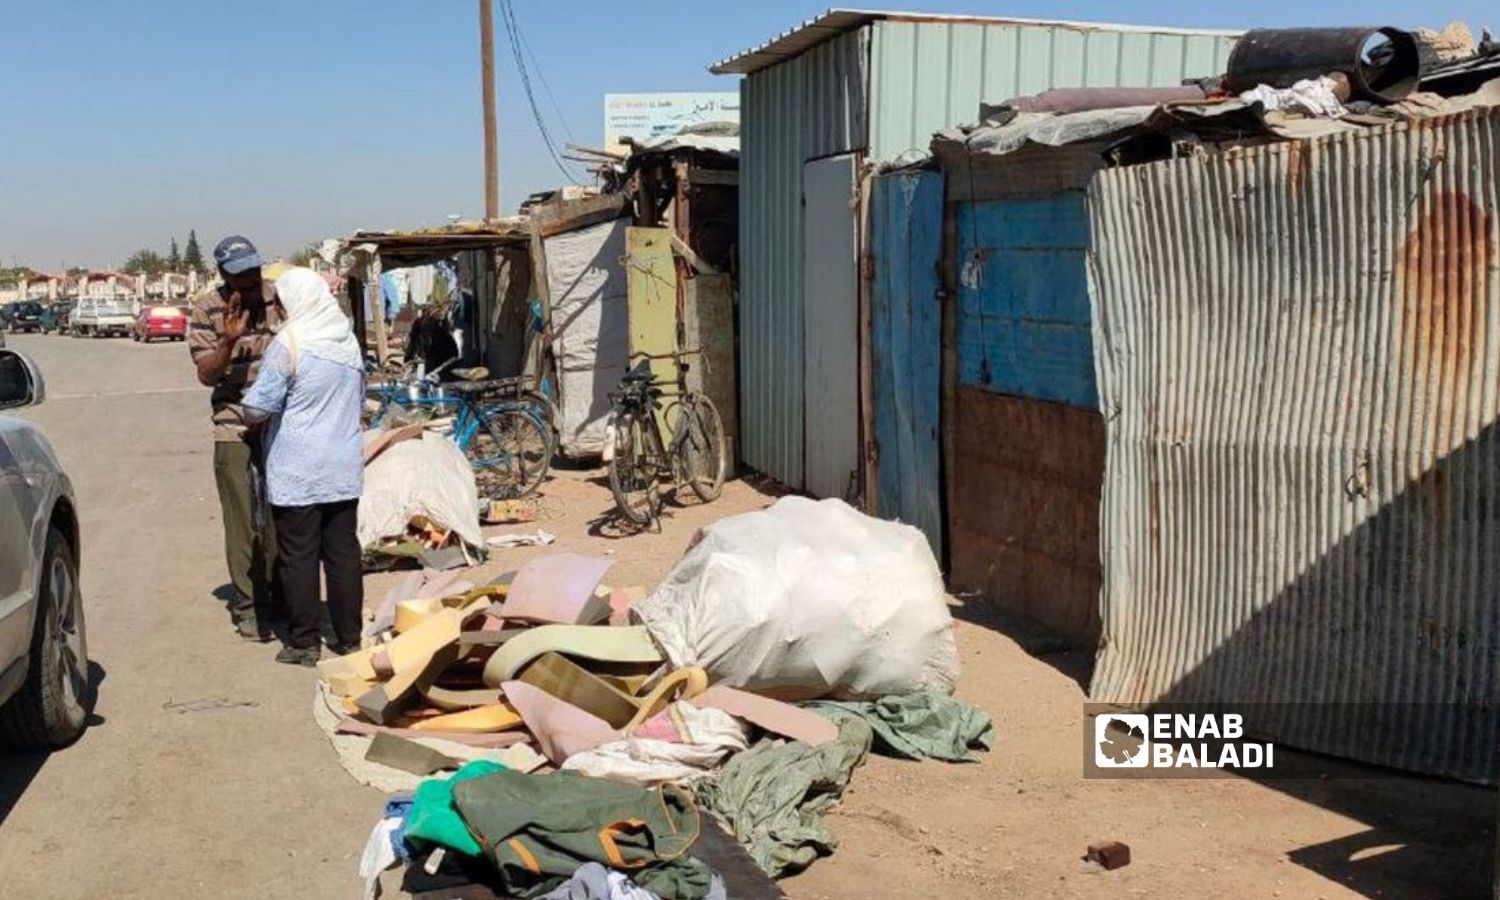 Stands selling used items in Souq al-Haramiya (stolen goods market) in Qamishli - October 2022 (Enab Baladi / Majd al-Salem)